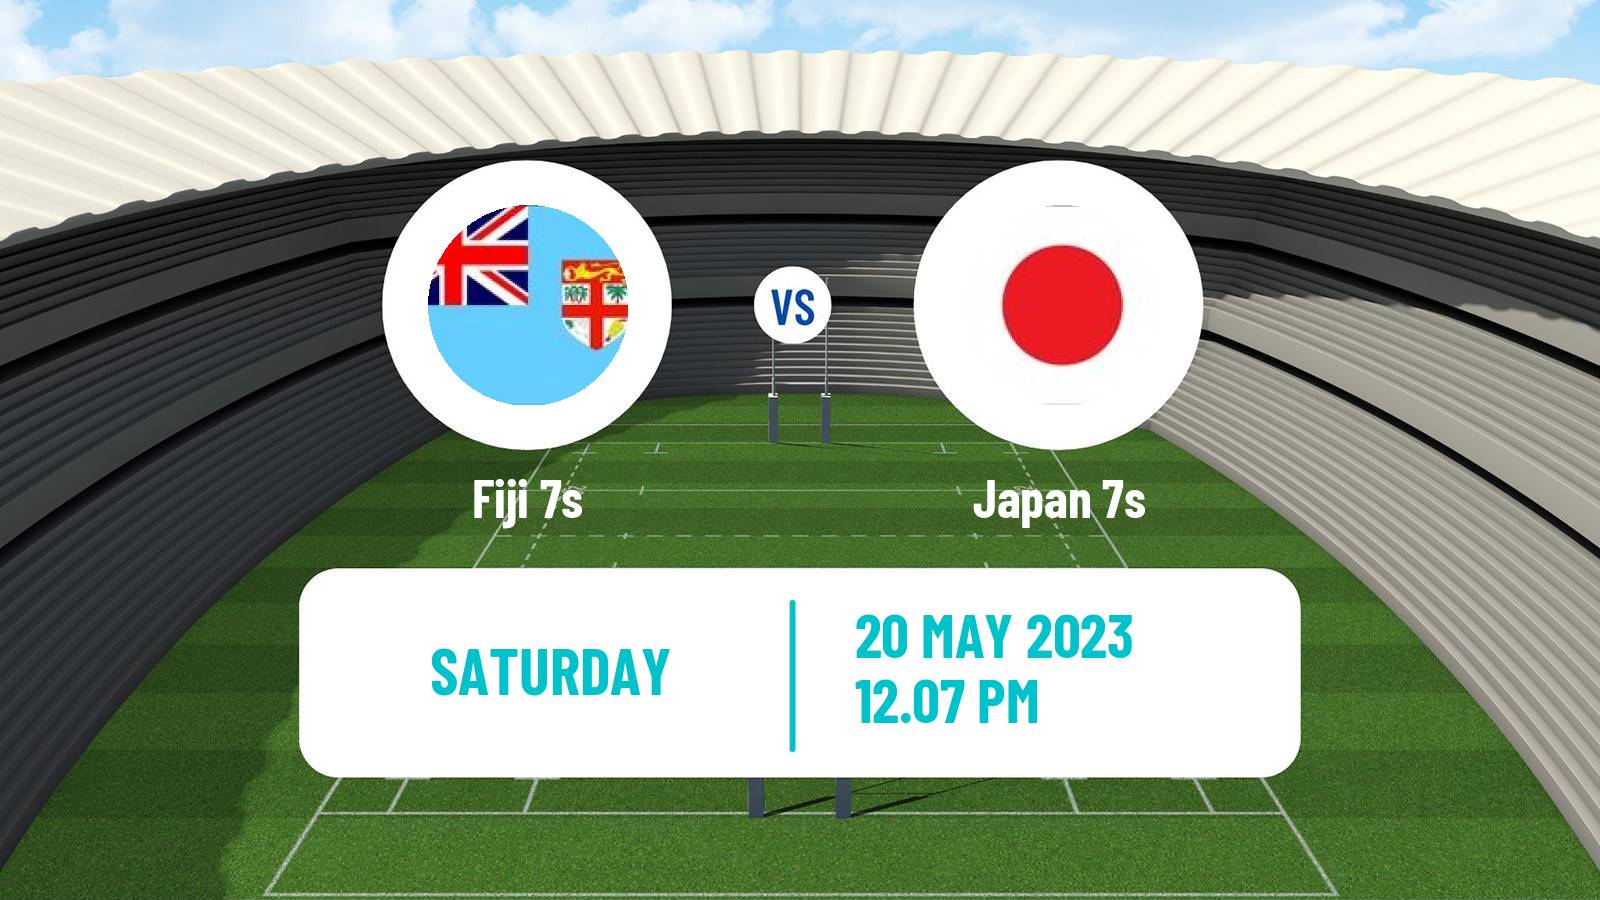 Rugby union Sevens World Series - England Fiji 7s - Japan 7s